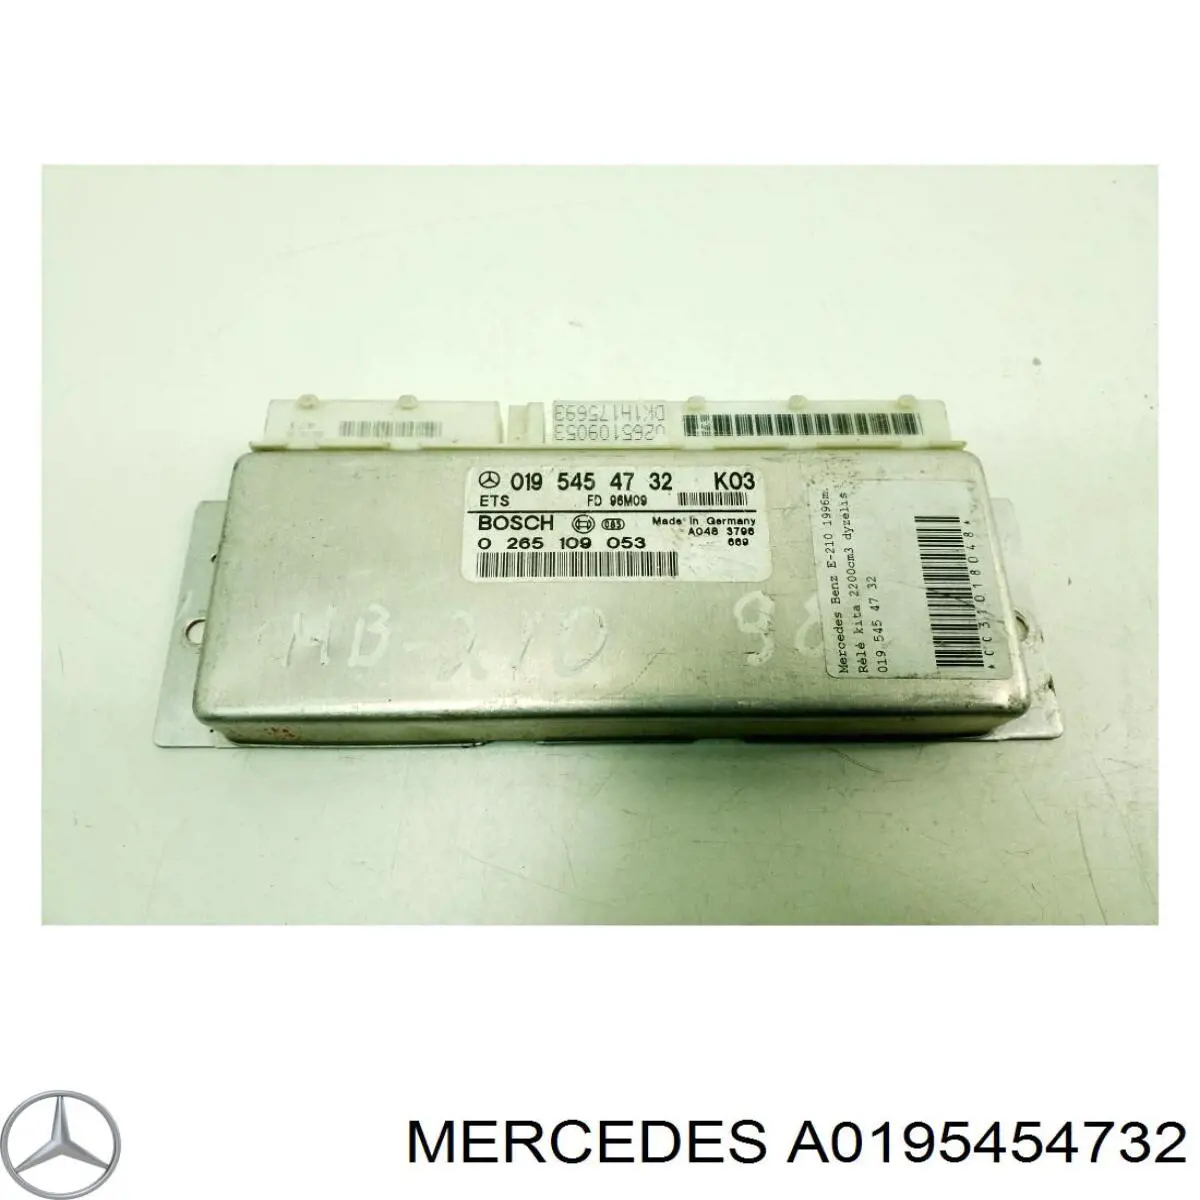 A0195454732 Mercedes блок керування контролю тяги (ets)